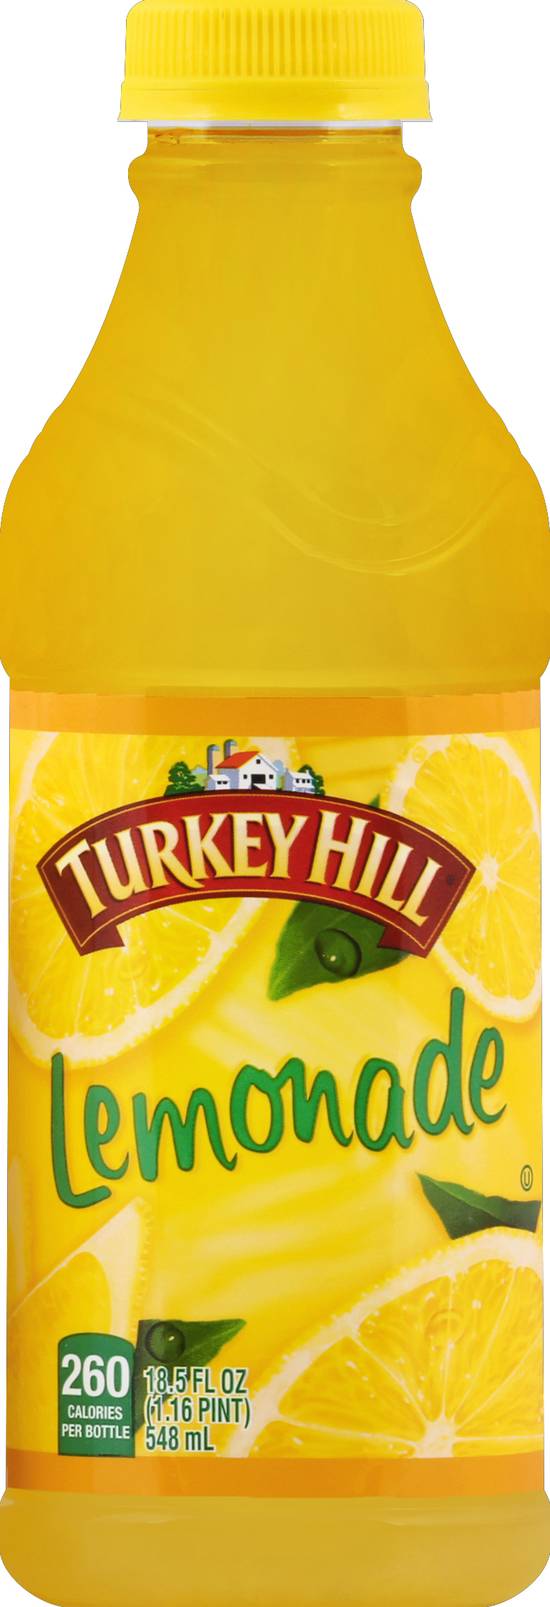 Turkey Hill Lemonade Drink (18.5 fl oz)